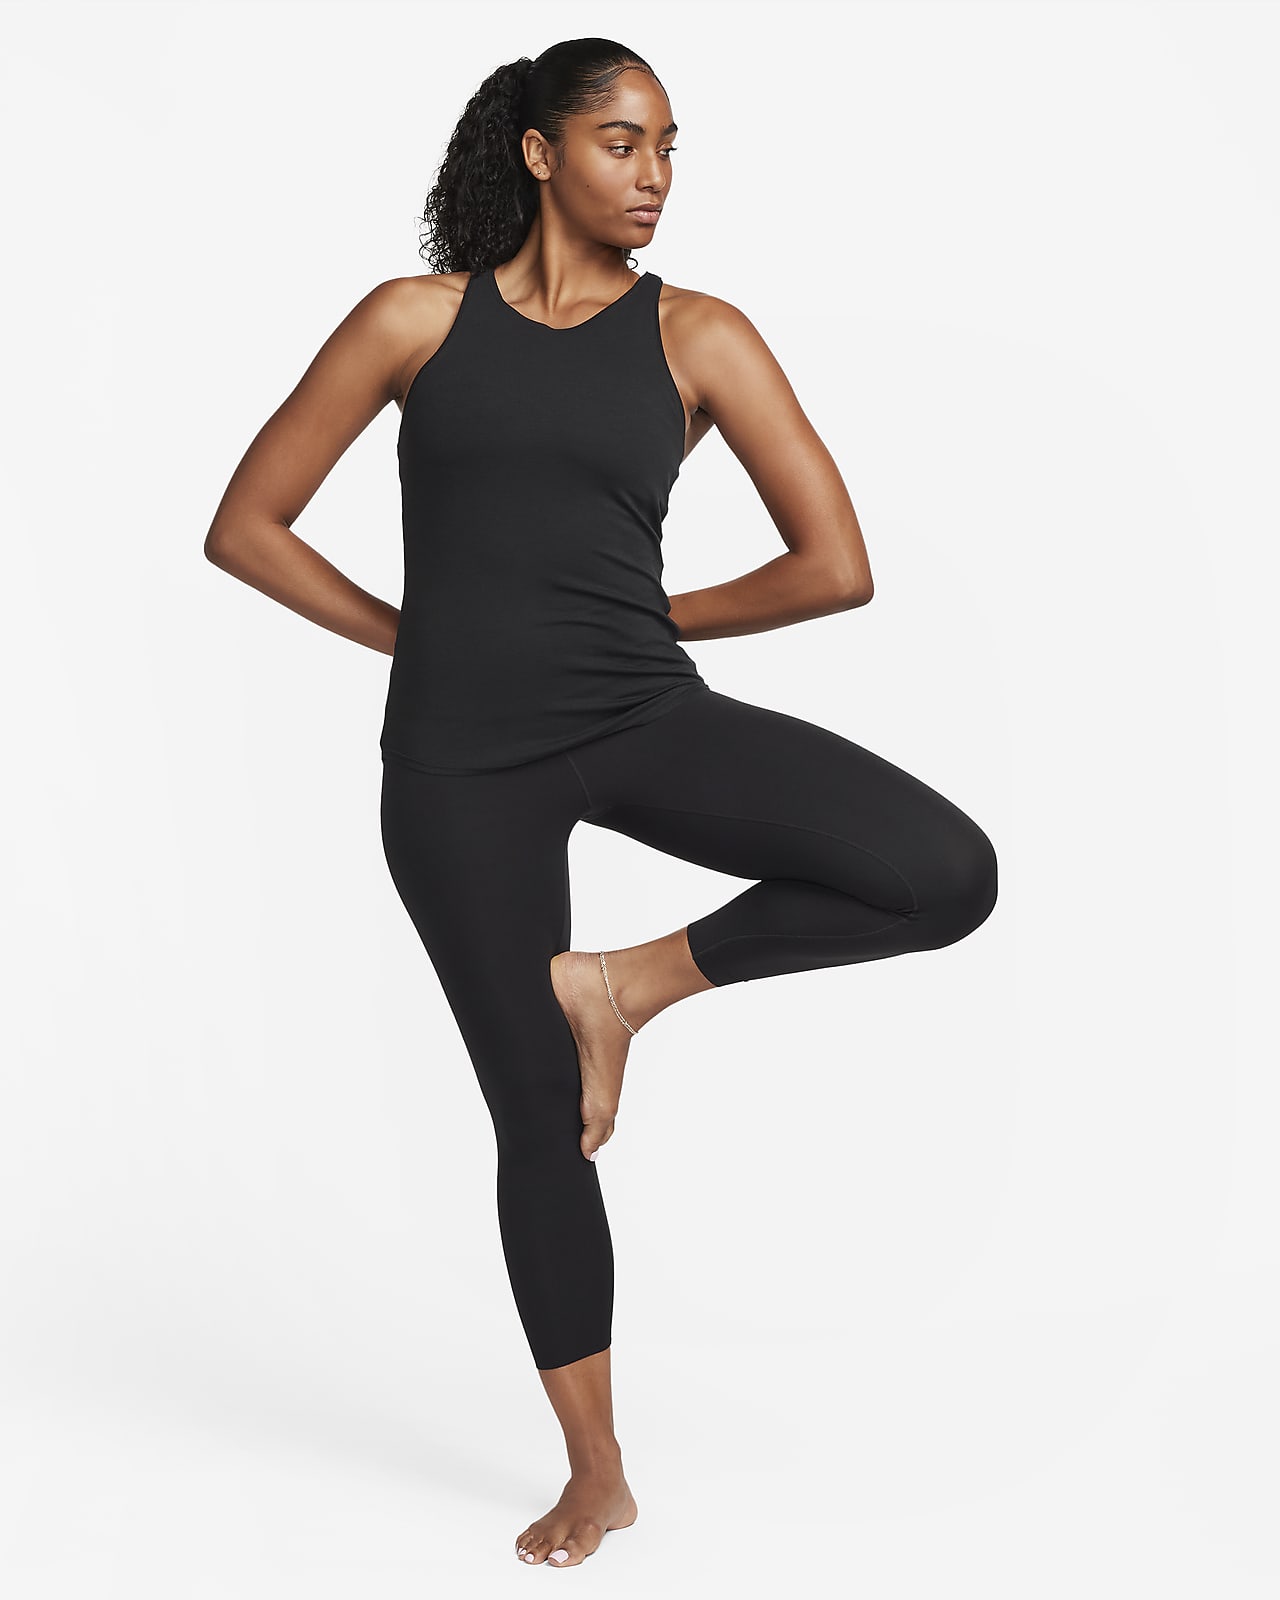 Nike Yoga Luxe Women's Shelf-bra Tank In Light Zitron,grey Fog